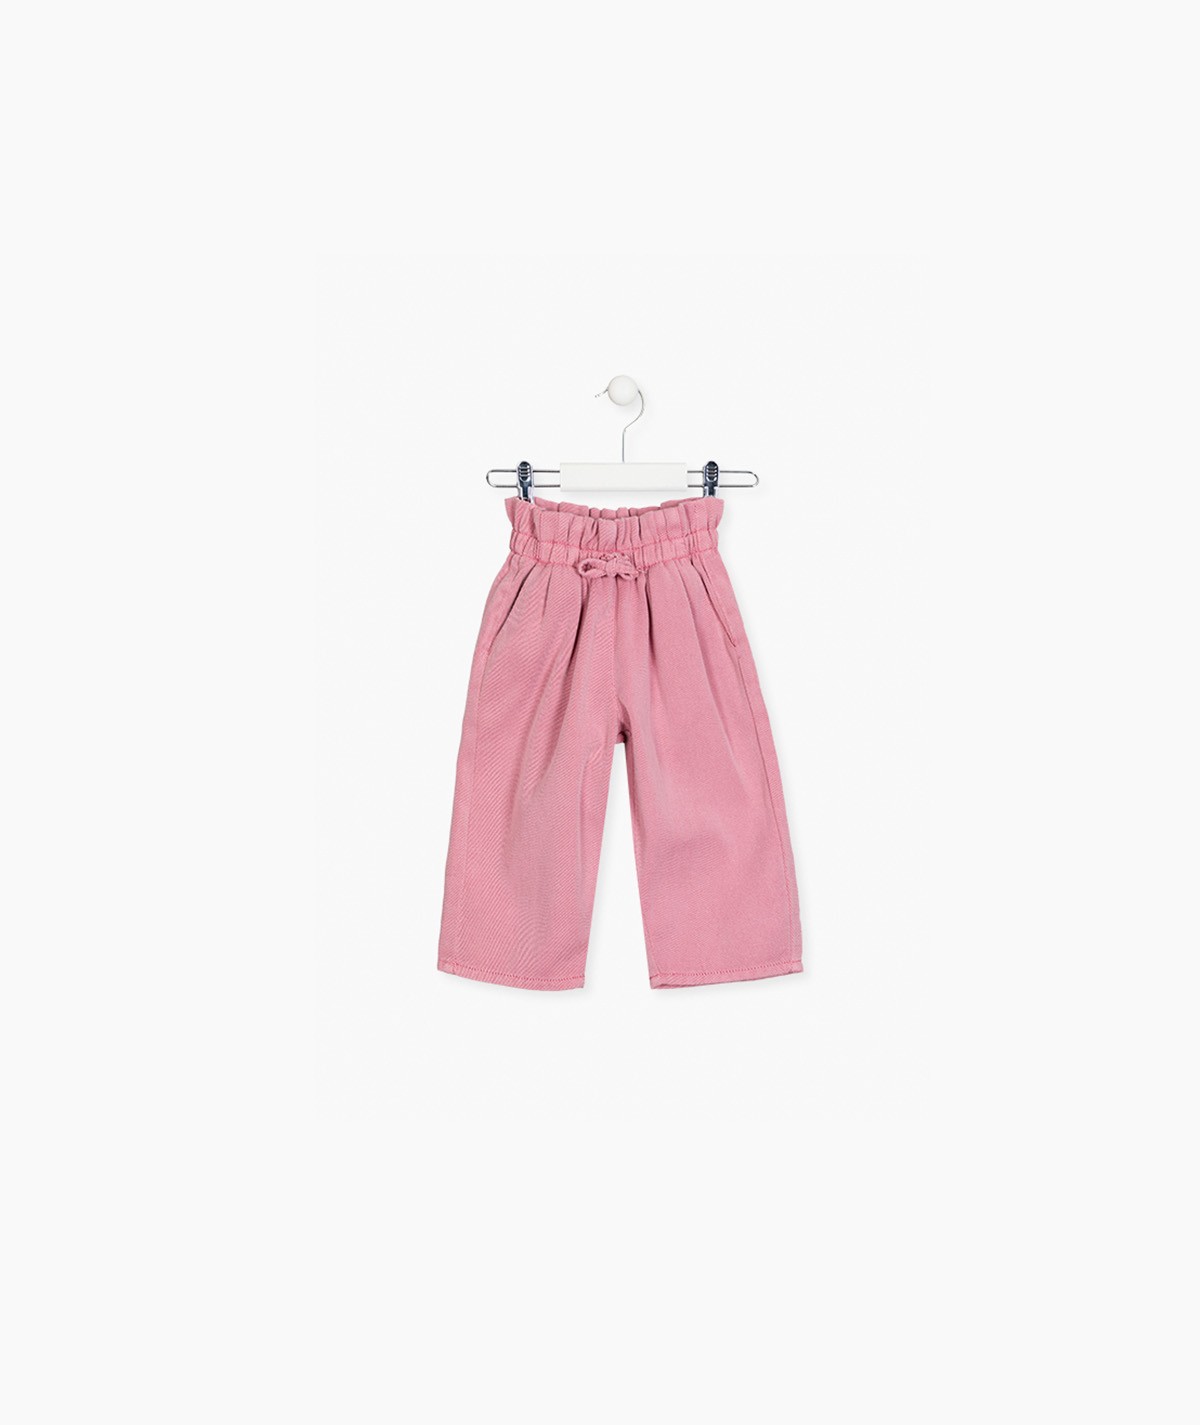 Pantalon rose pour fille